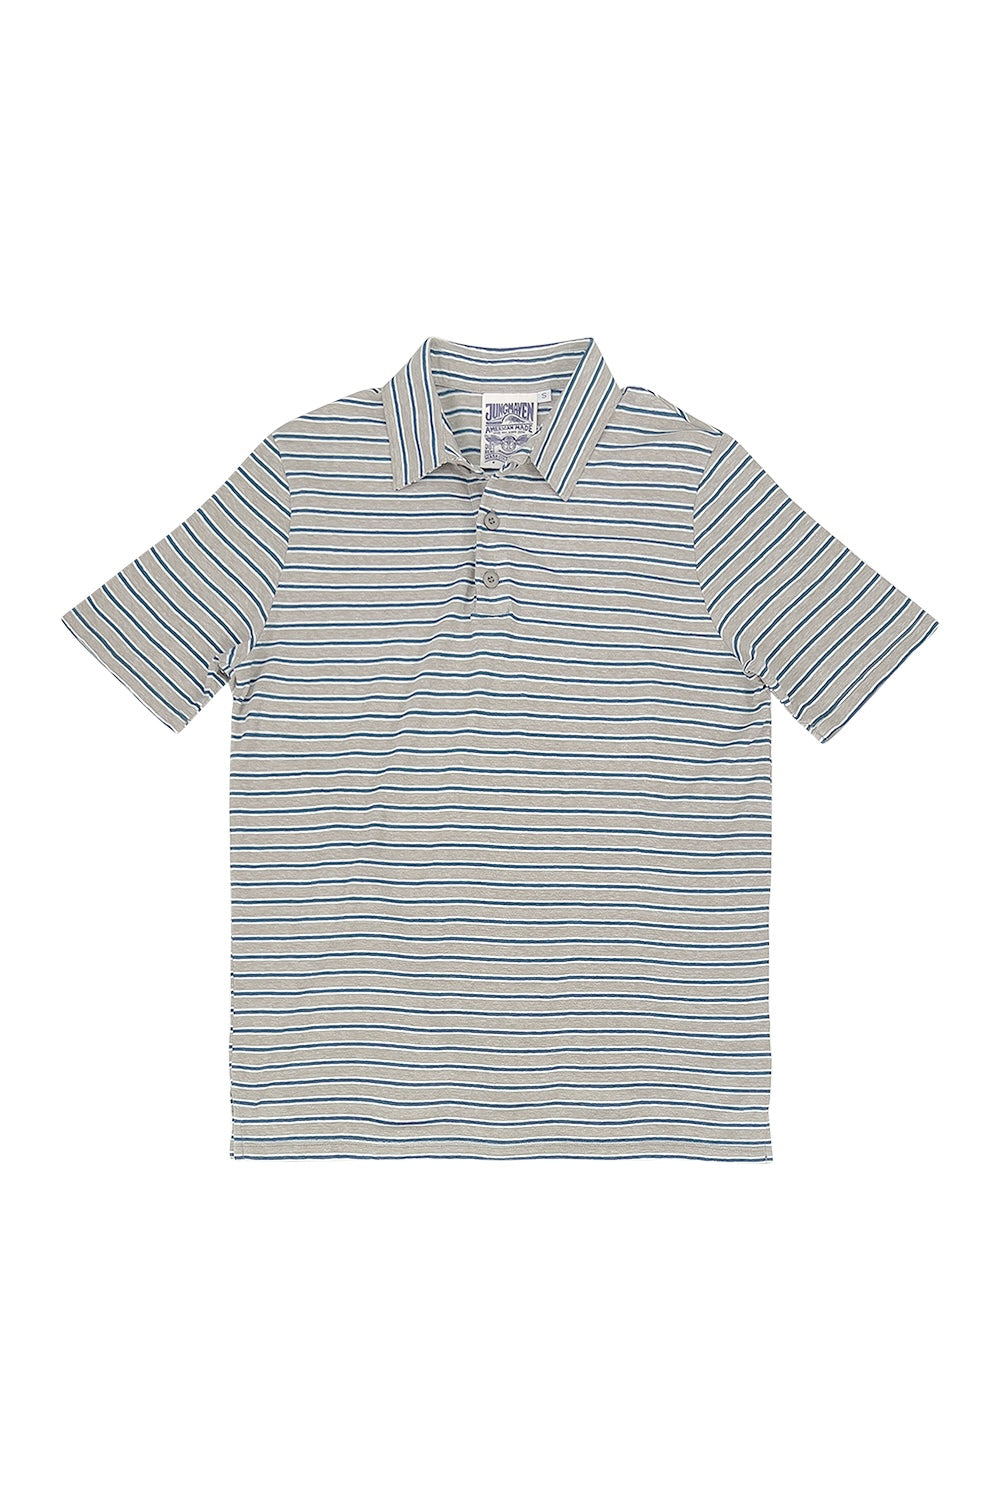 Stripe Camden Polo  | Jungmaven Hemp Clothing & Accessories / Color: Teal/White/ Gray Stripe